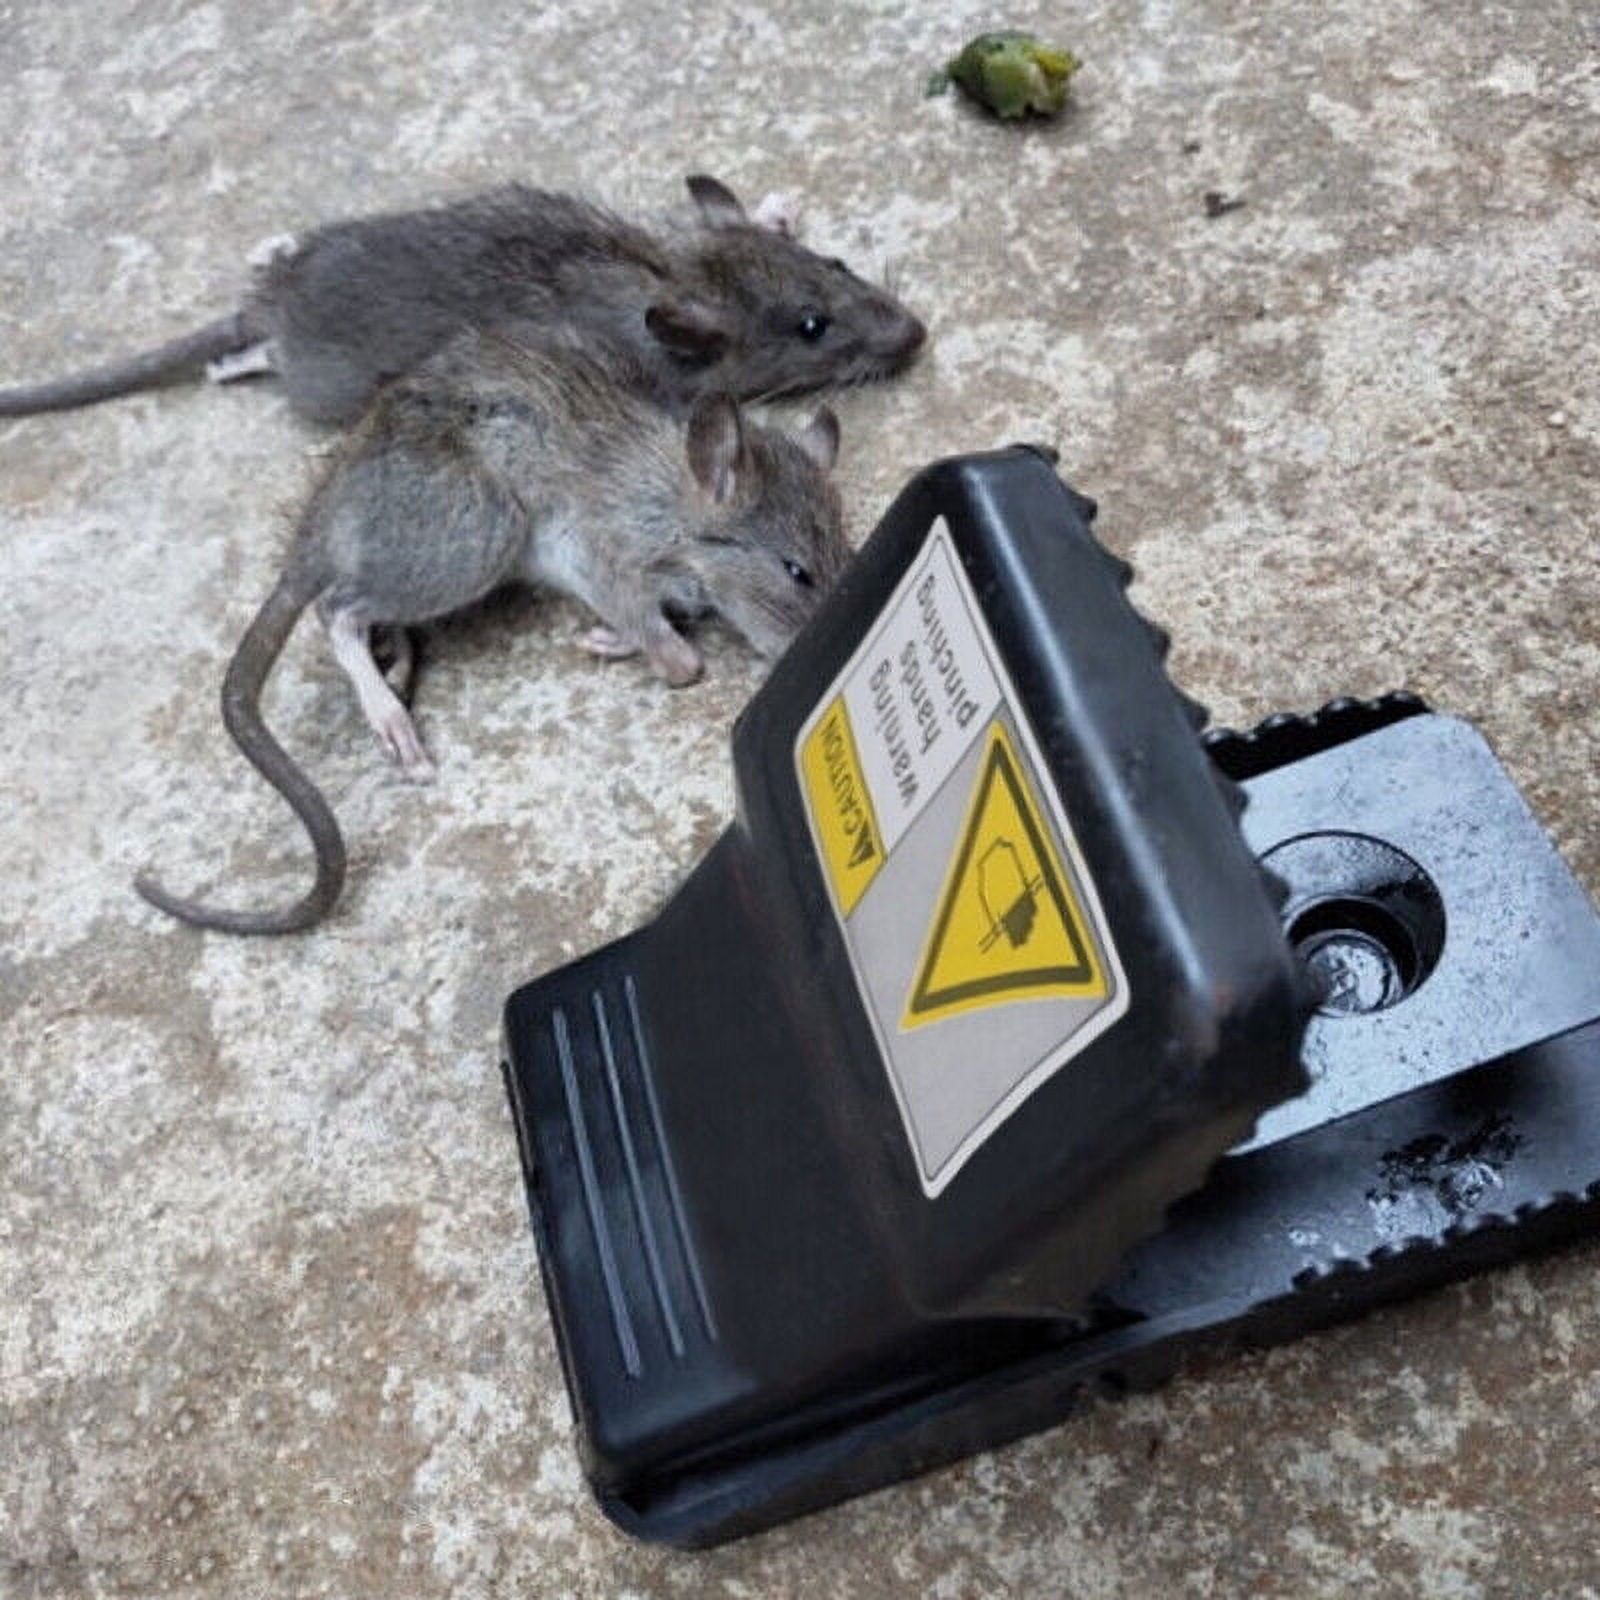 Kryc 20 Pcs 6 X 3 Large Size Mouse Trap Pest Control Rat Trap Outdoor  Reusable Humane Mouse Catcher Effective Sanitary Quick Easy Snap Humane  Rodent